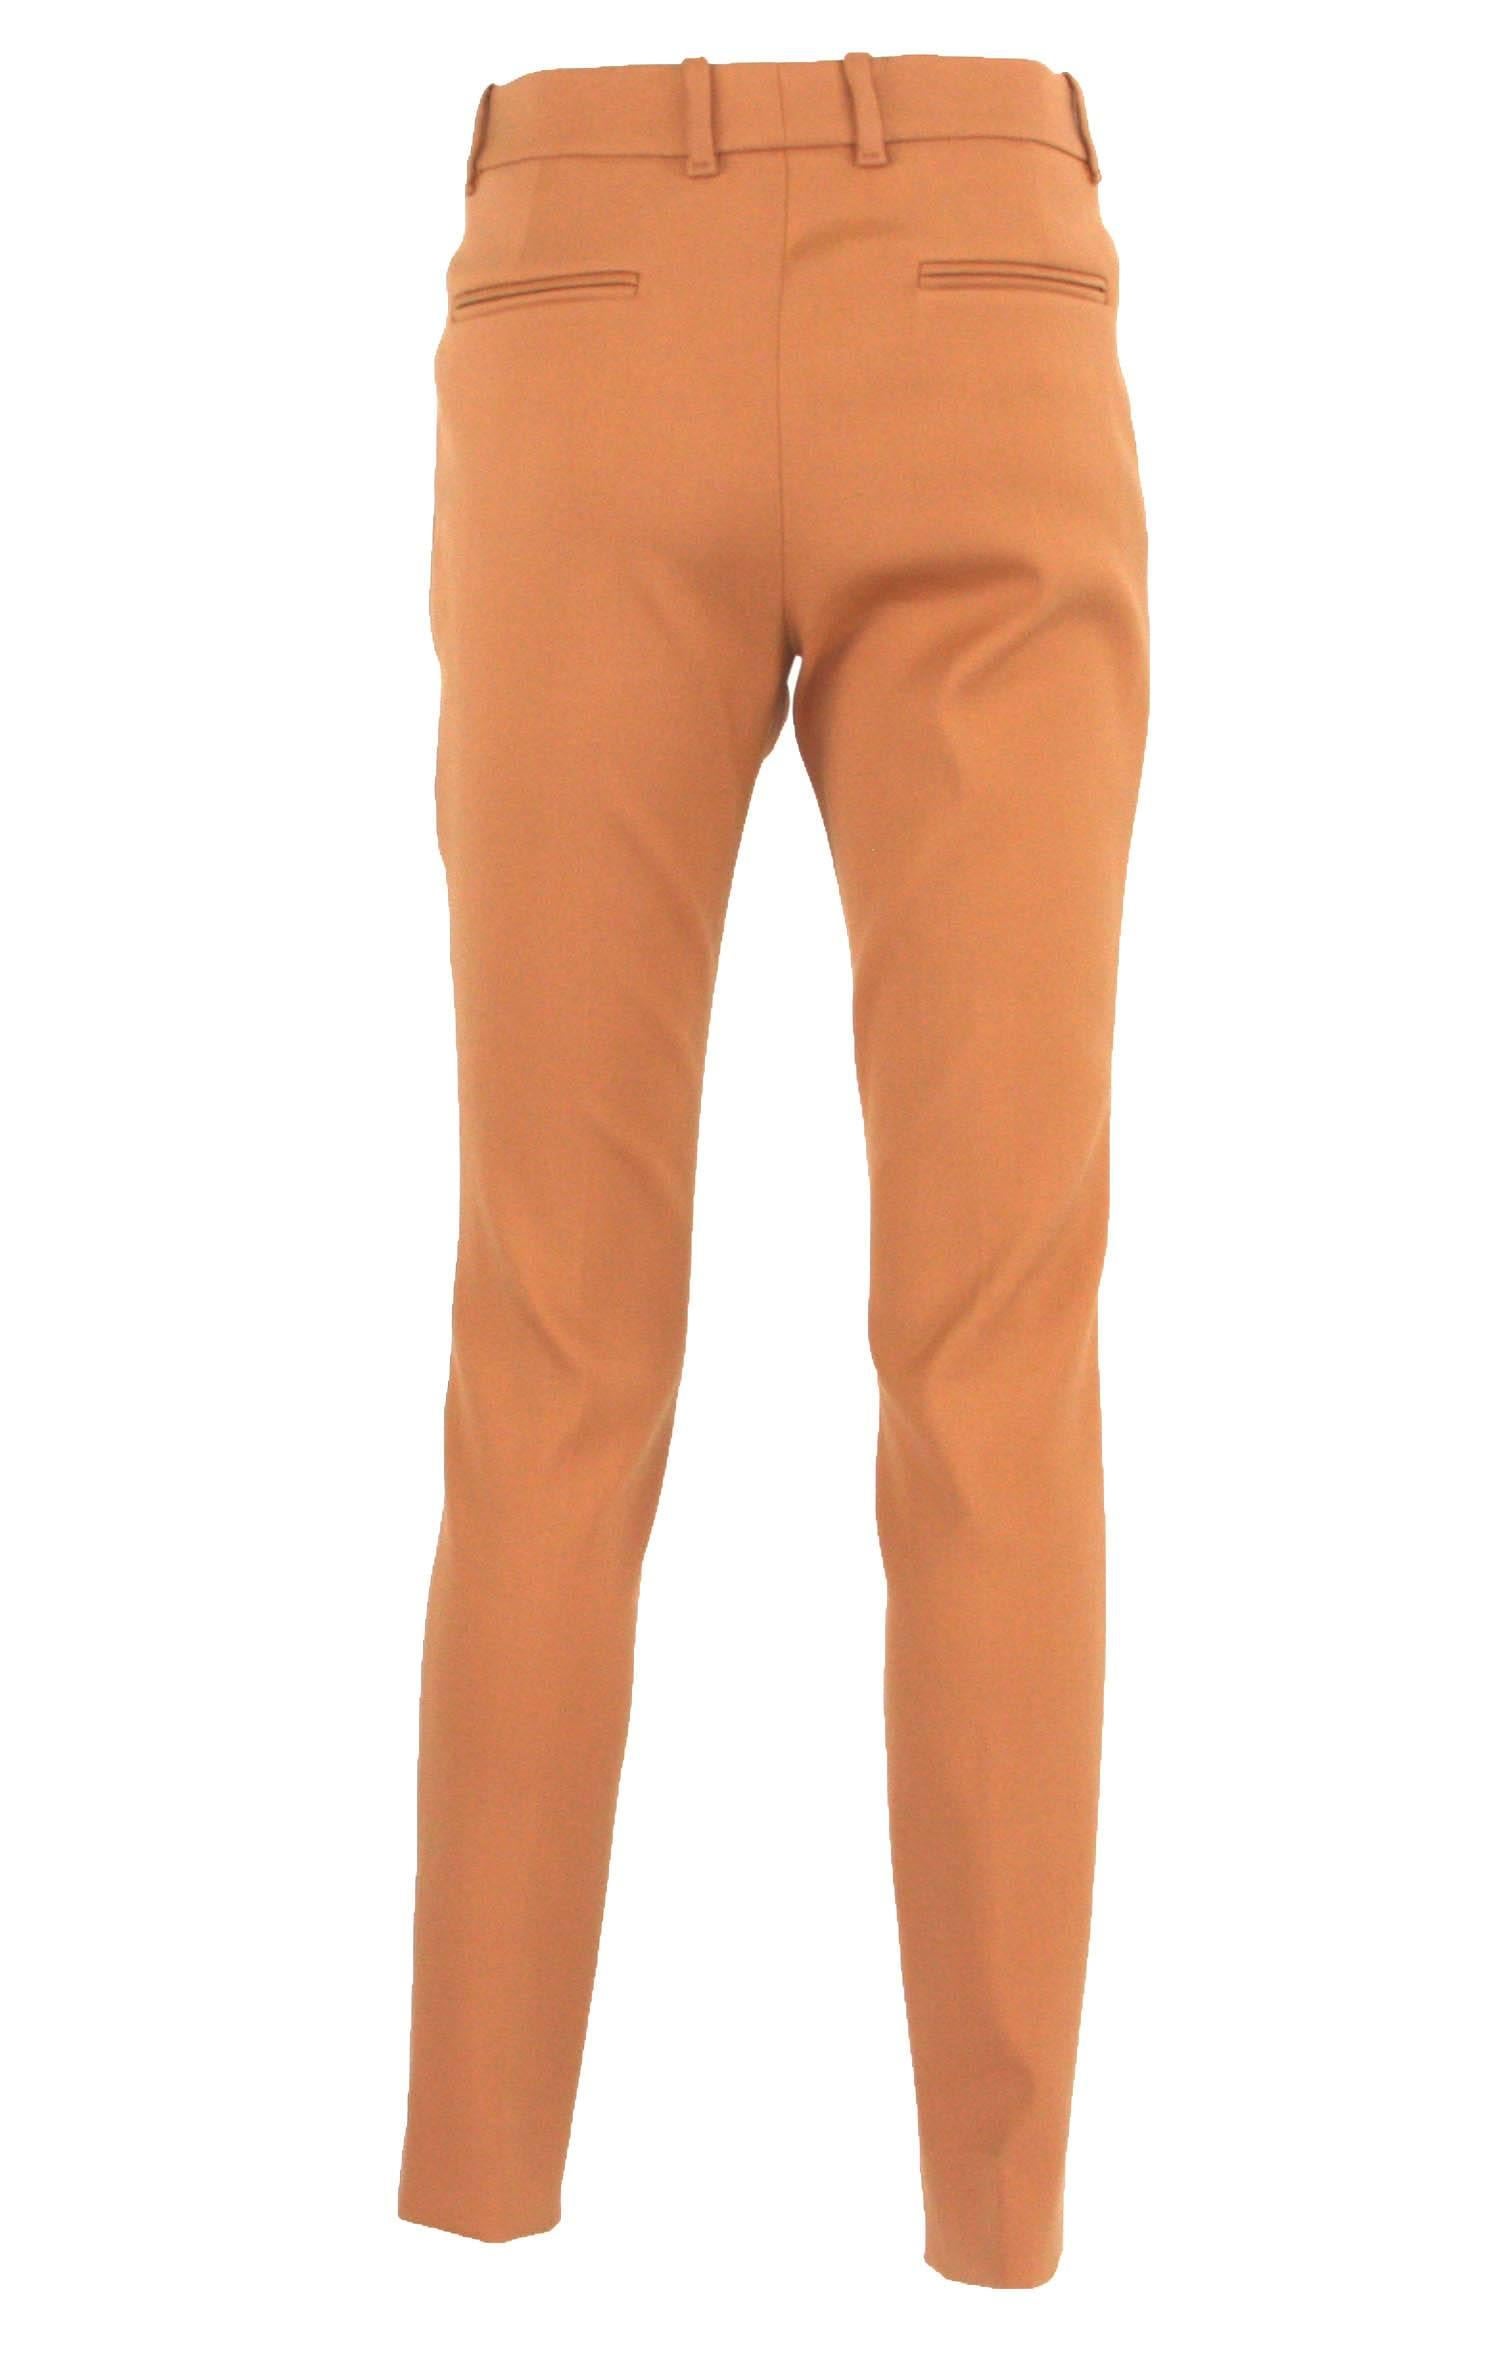 New Gucci Salmon Pant Suit Silk Blouse Stretch Slim Pants Leather Belt 42 - 6/8 For Sale 3